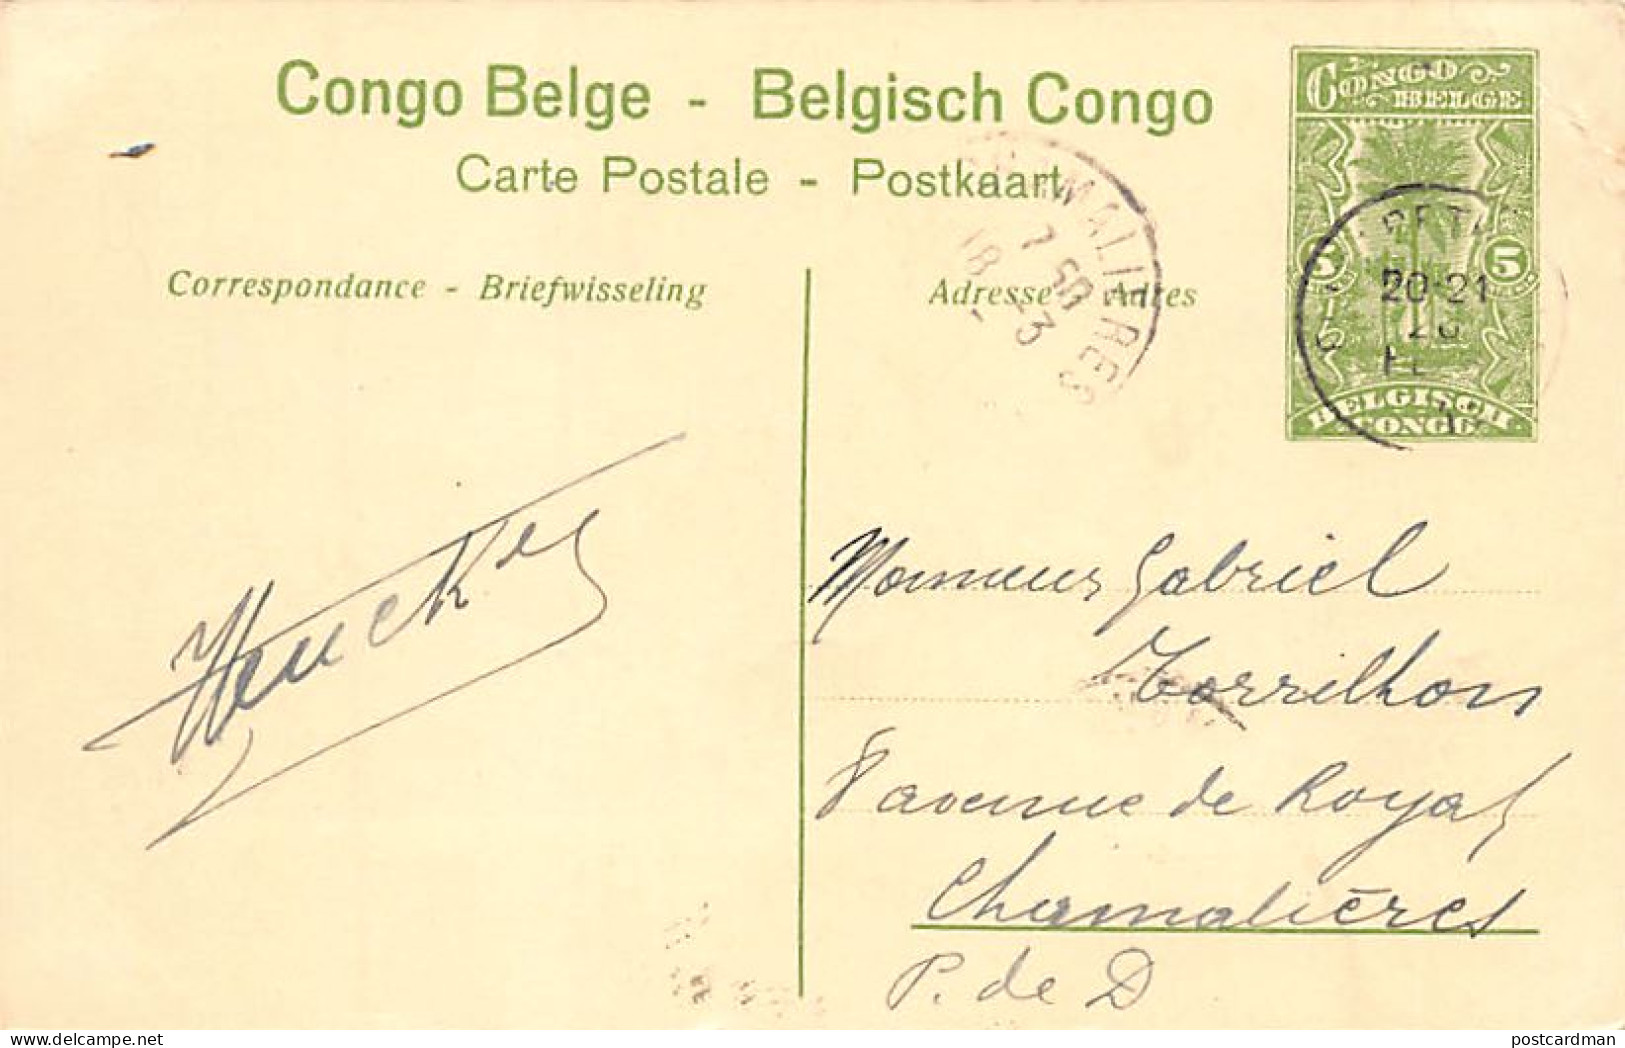 Congo Kinshasa - KATANGA - Indigènes Nivelant Une Termitière - Entier Postal 5 Centimes - Ed. Congo Belge 5 - Congo Belge